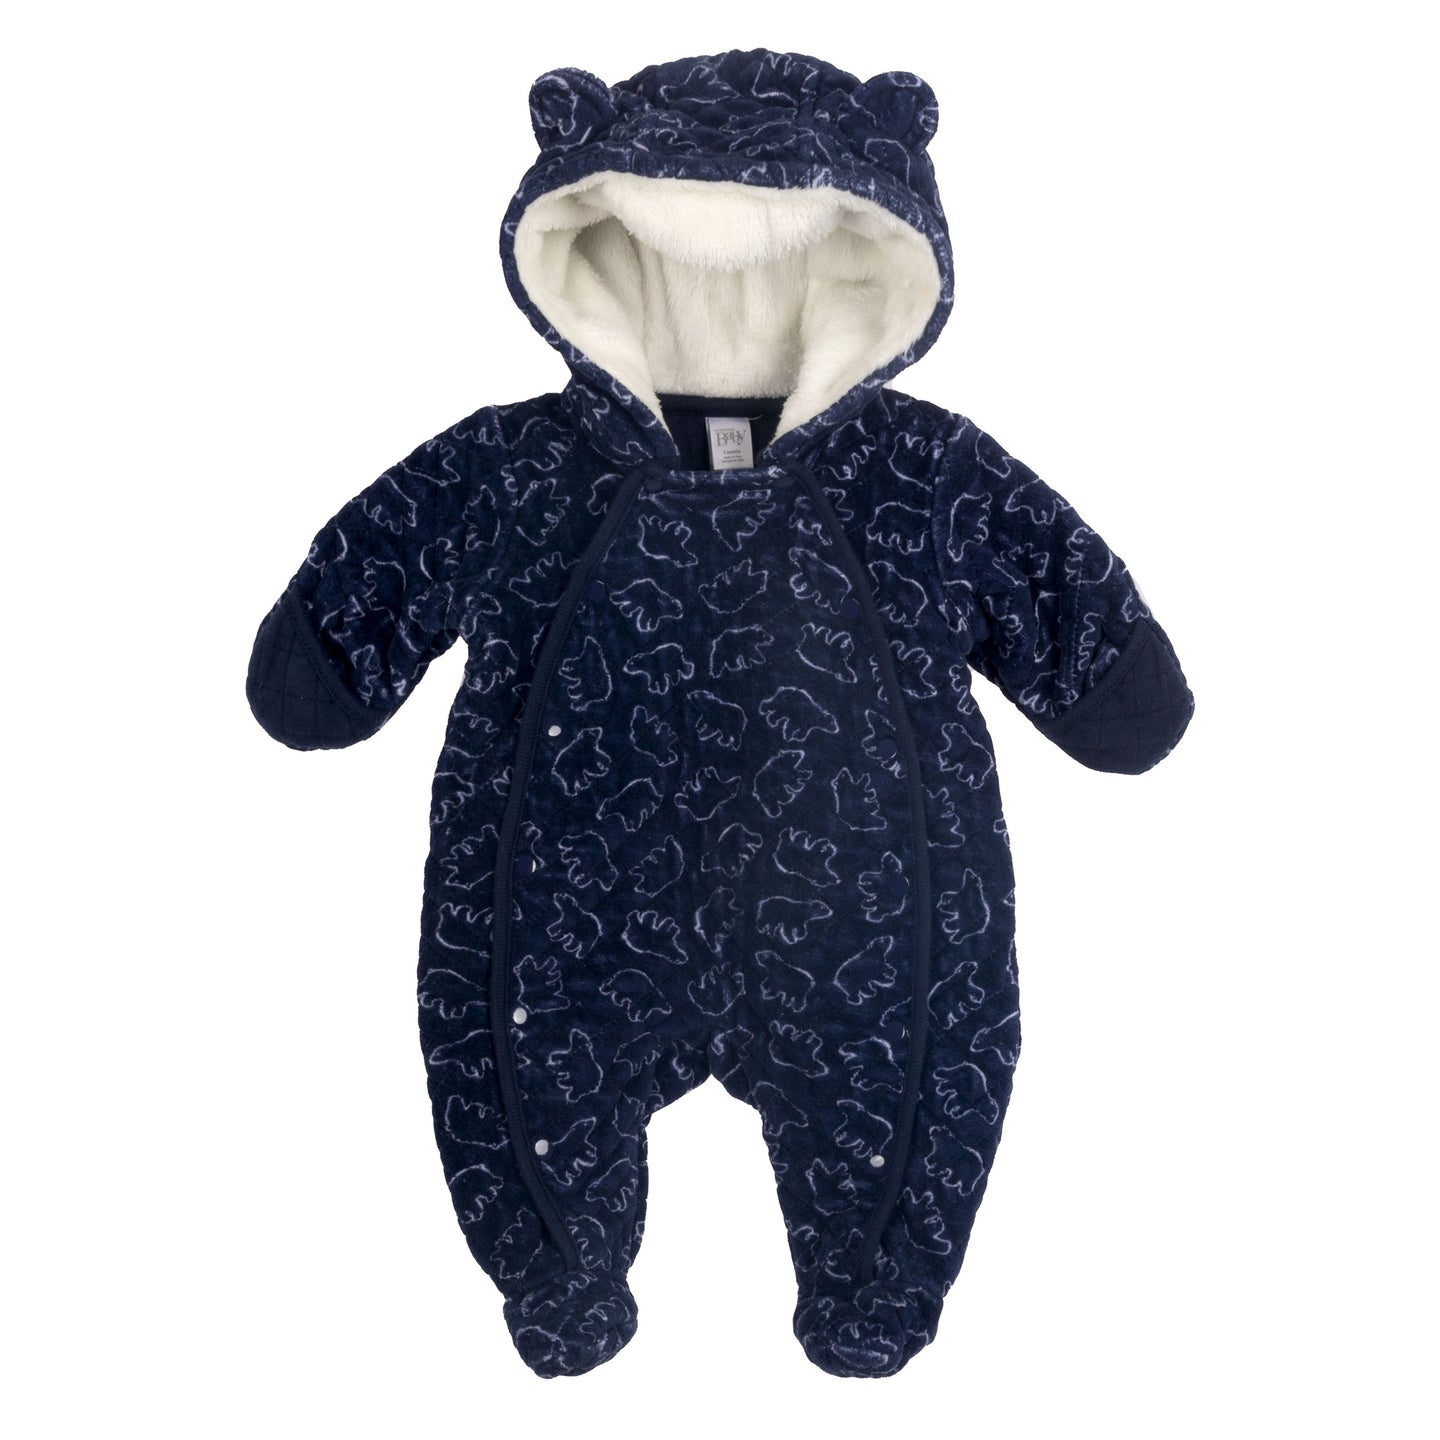 [3m] Nordstrom Baby Bunting Suit - Polar Bear